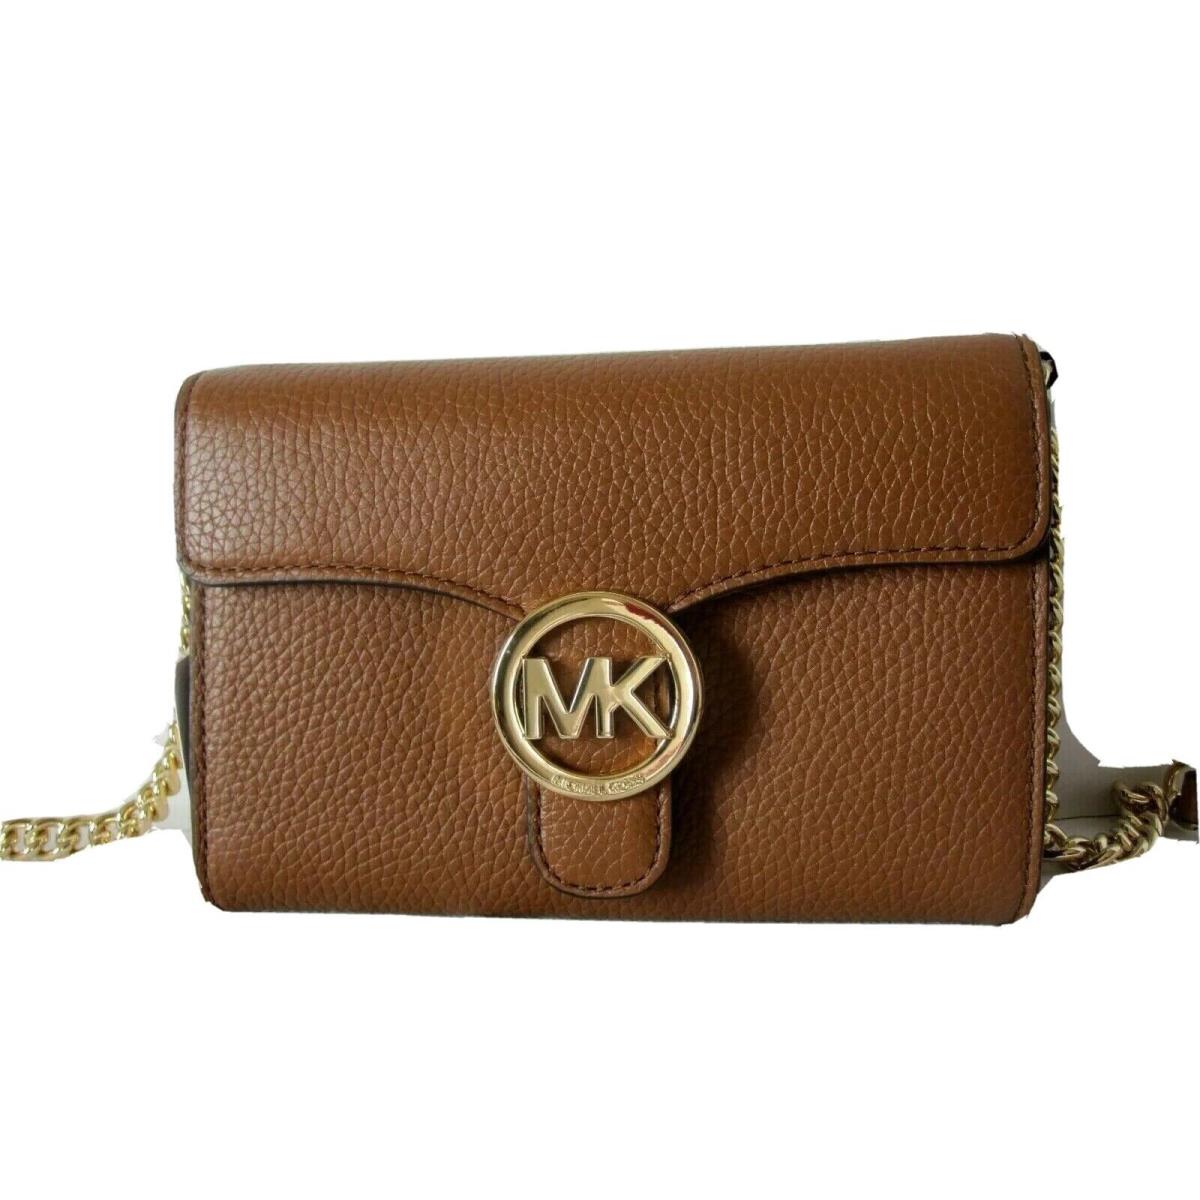 Michael Kors Luggage Vanna LG Phone Crossbody Leather Bag Handbag Purse